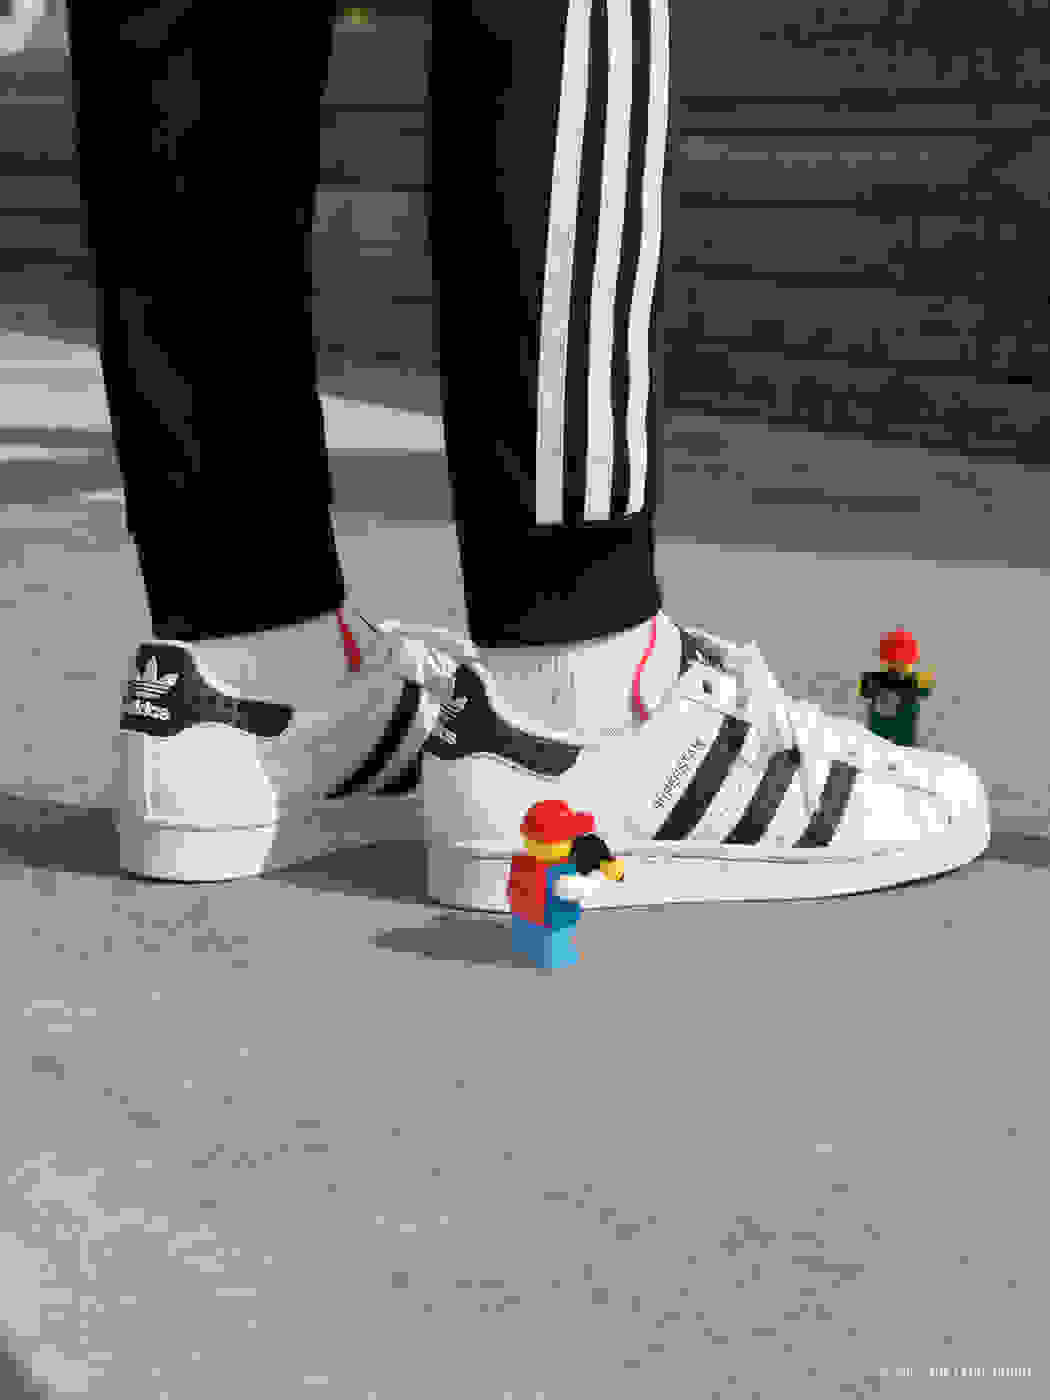 Child wearing adidas Originals LEGO Superstar&nbsp; with LEGO papparzzi minifigures